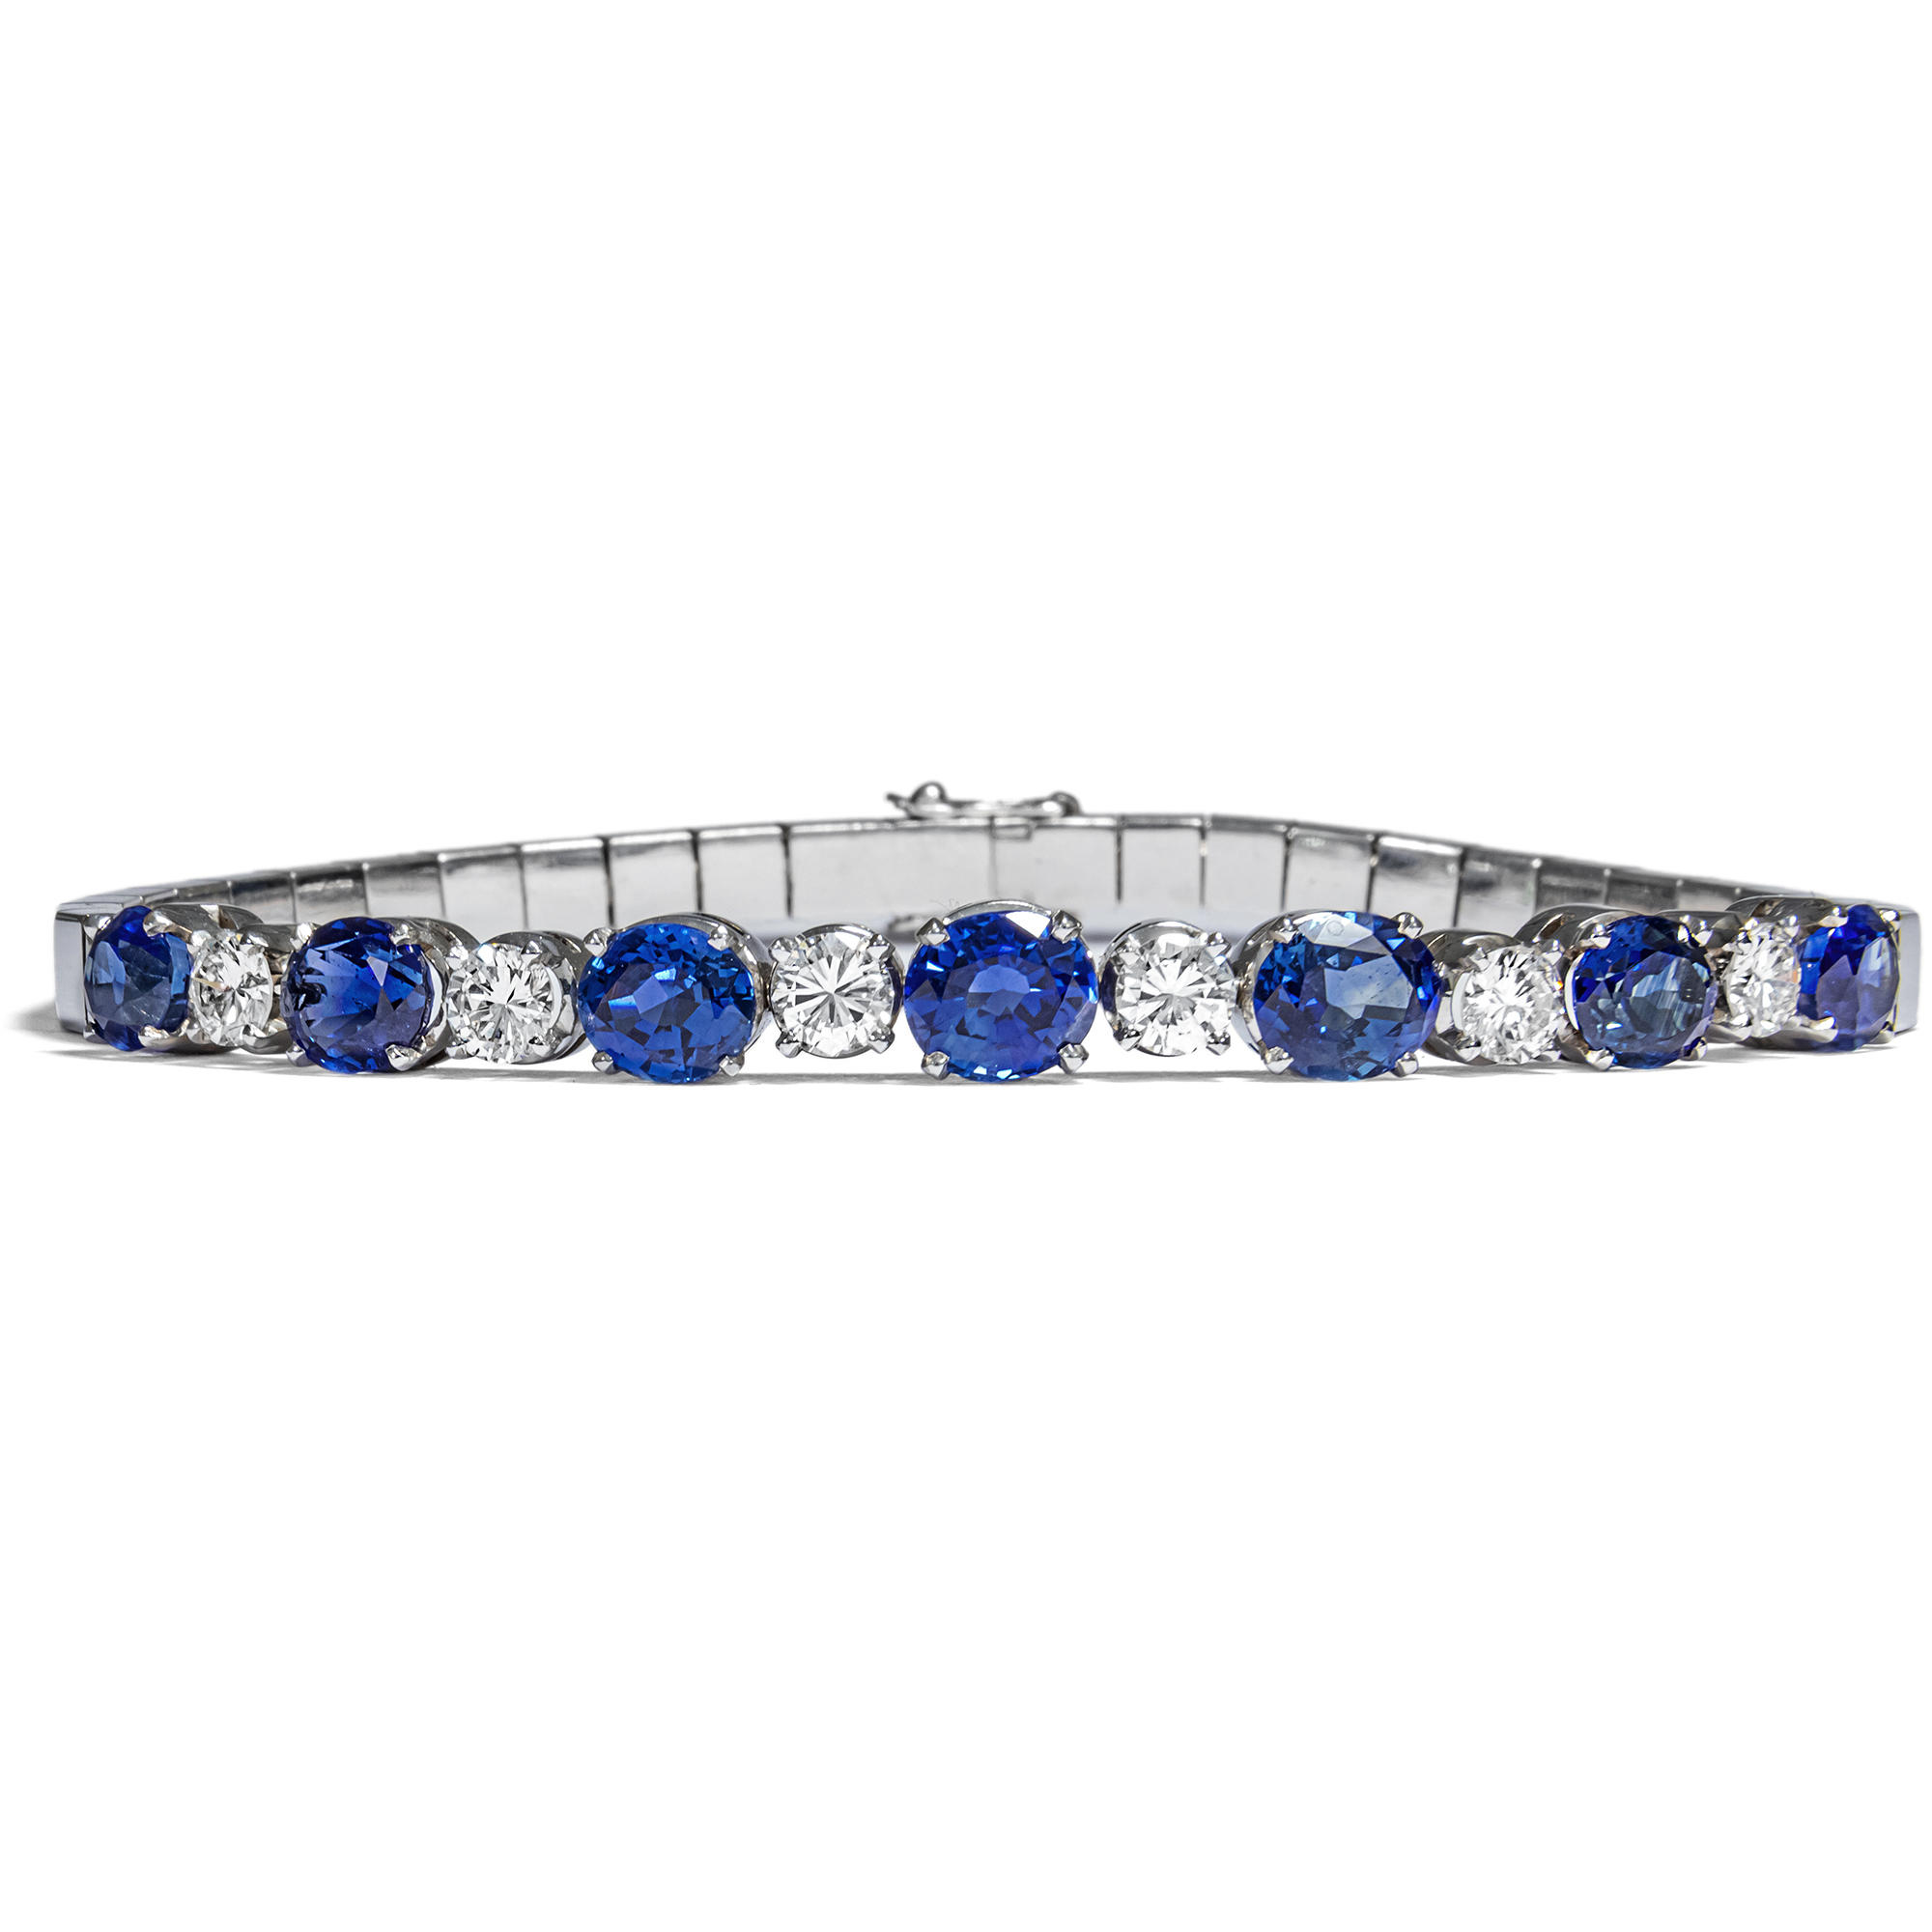 Luxurious Vintage Bracelet with Sapphires & Diamonds by Hemmerle, Munich c. 1975